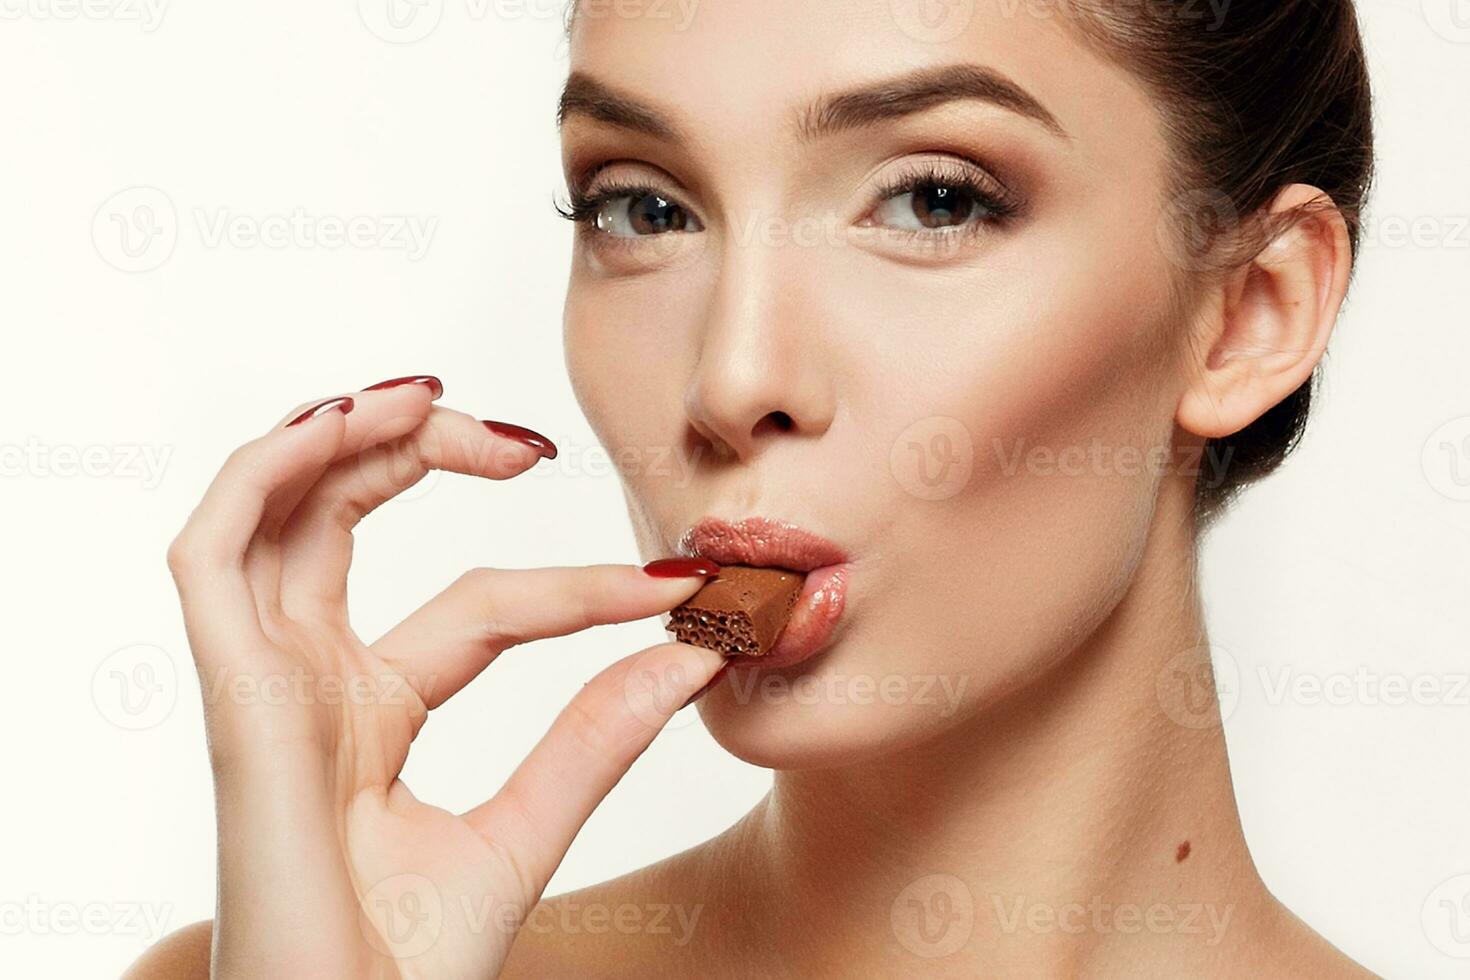 adorável sorridente Adolescência menina comendo chocolate foto